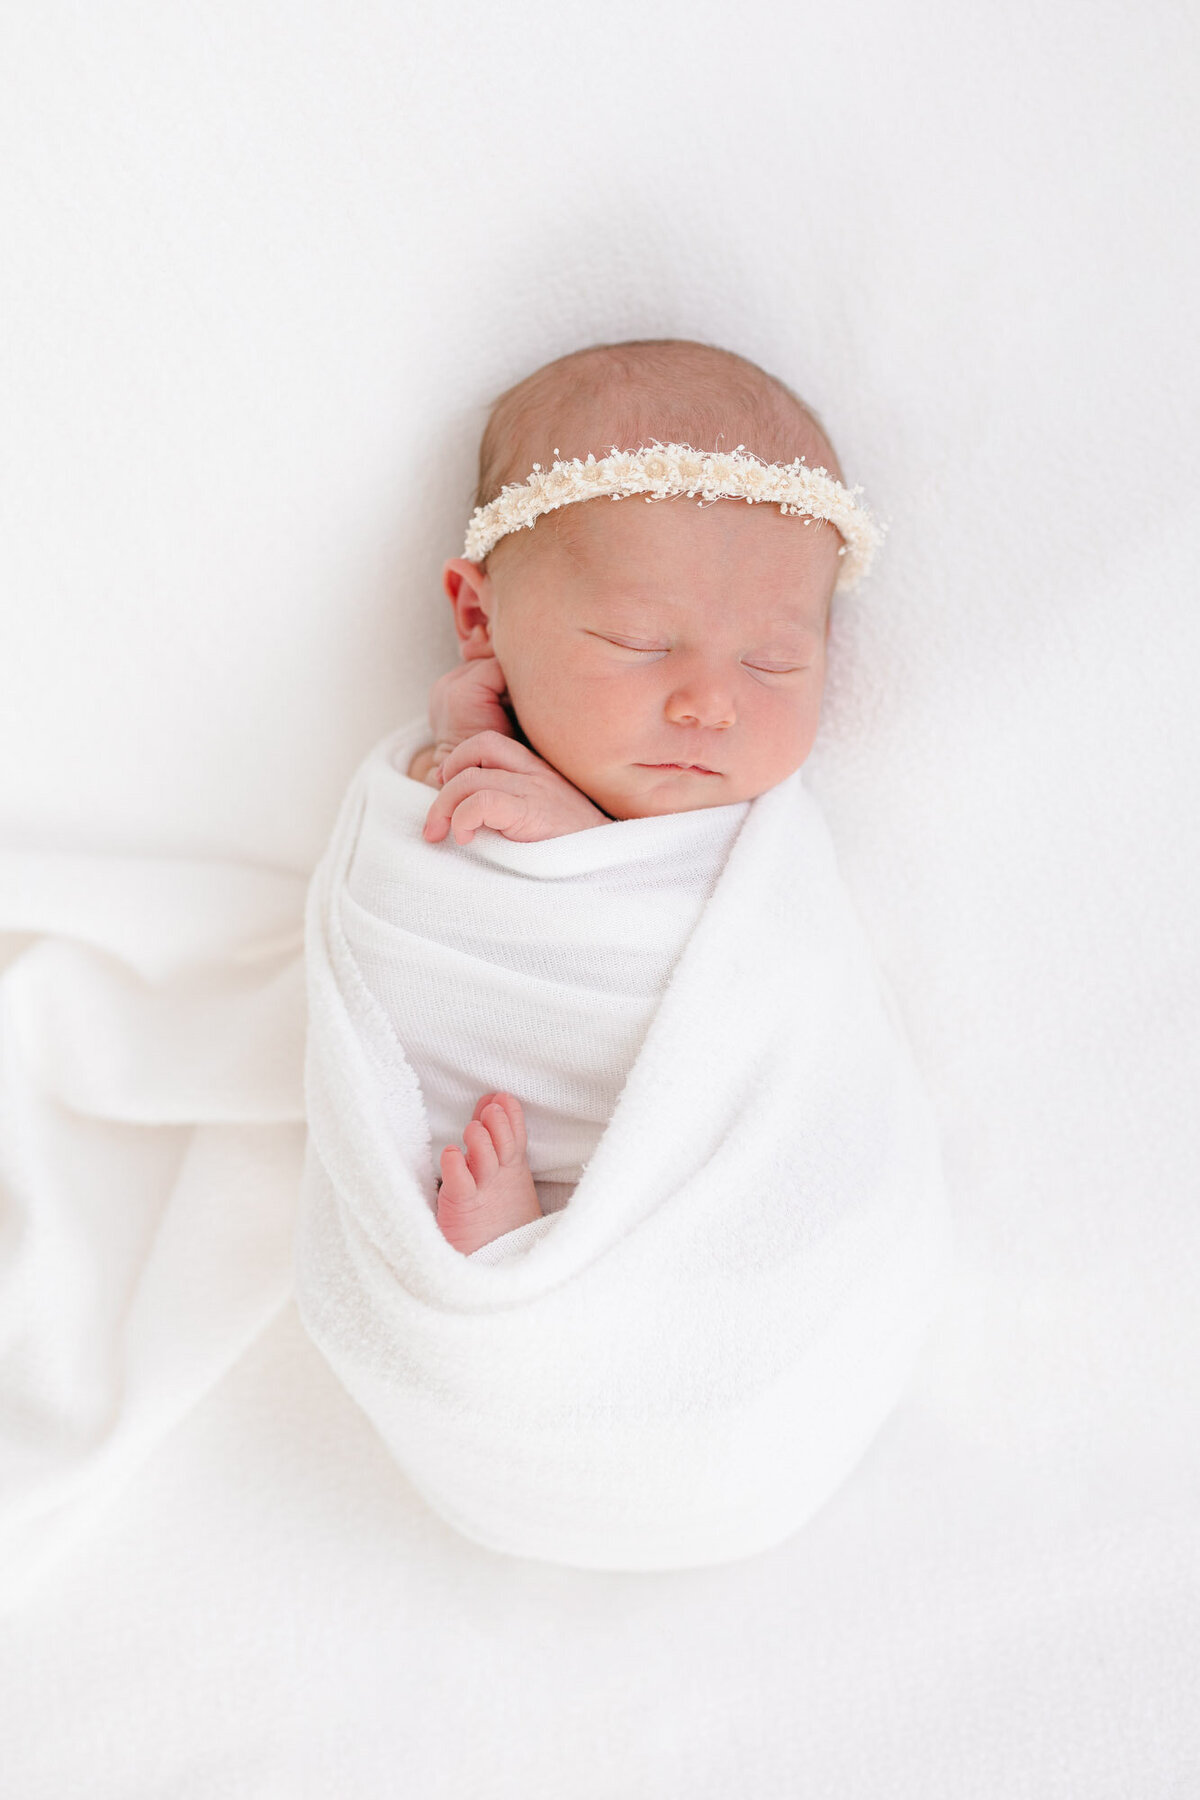 louisville-newborn-photographer-missy-marshall-8